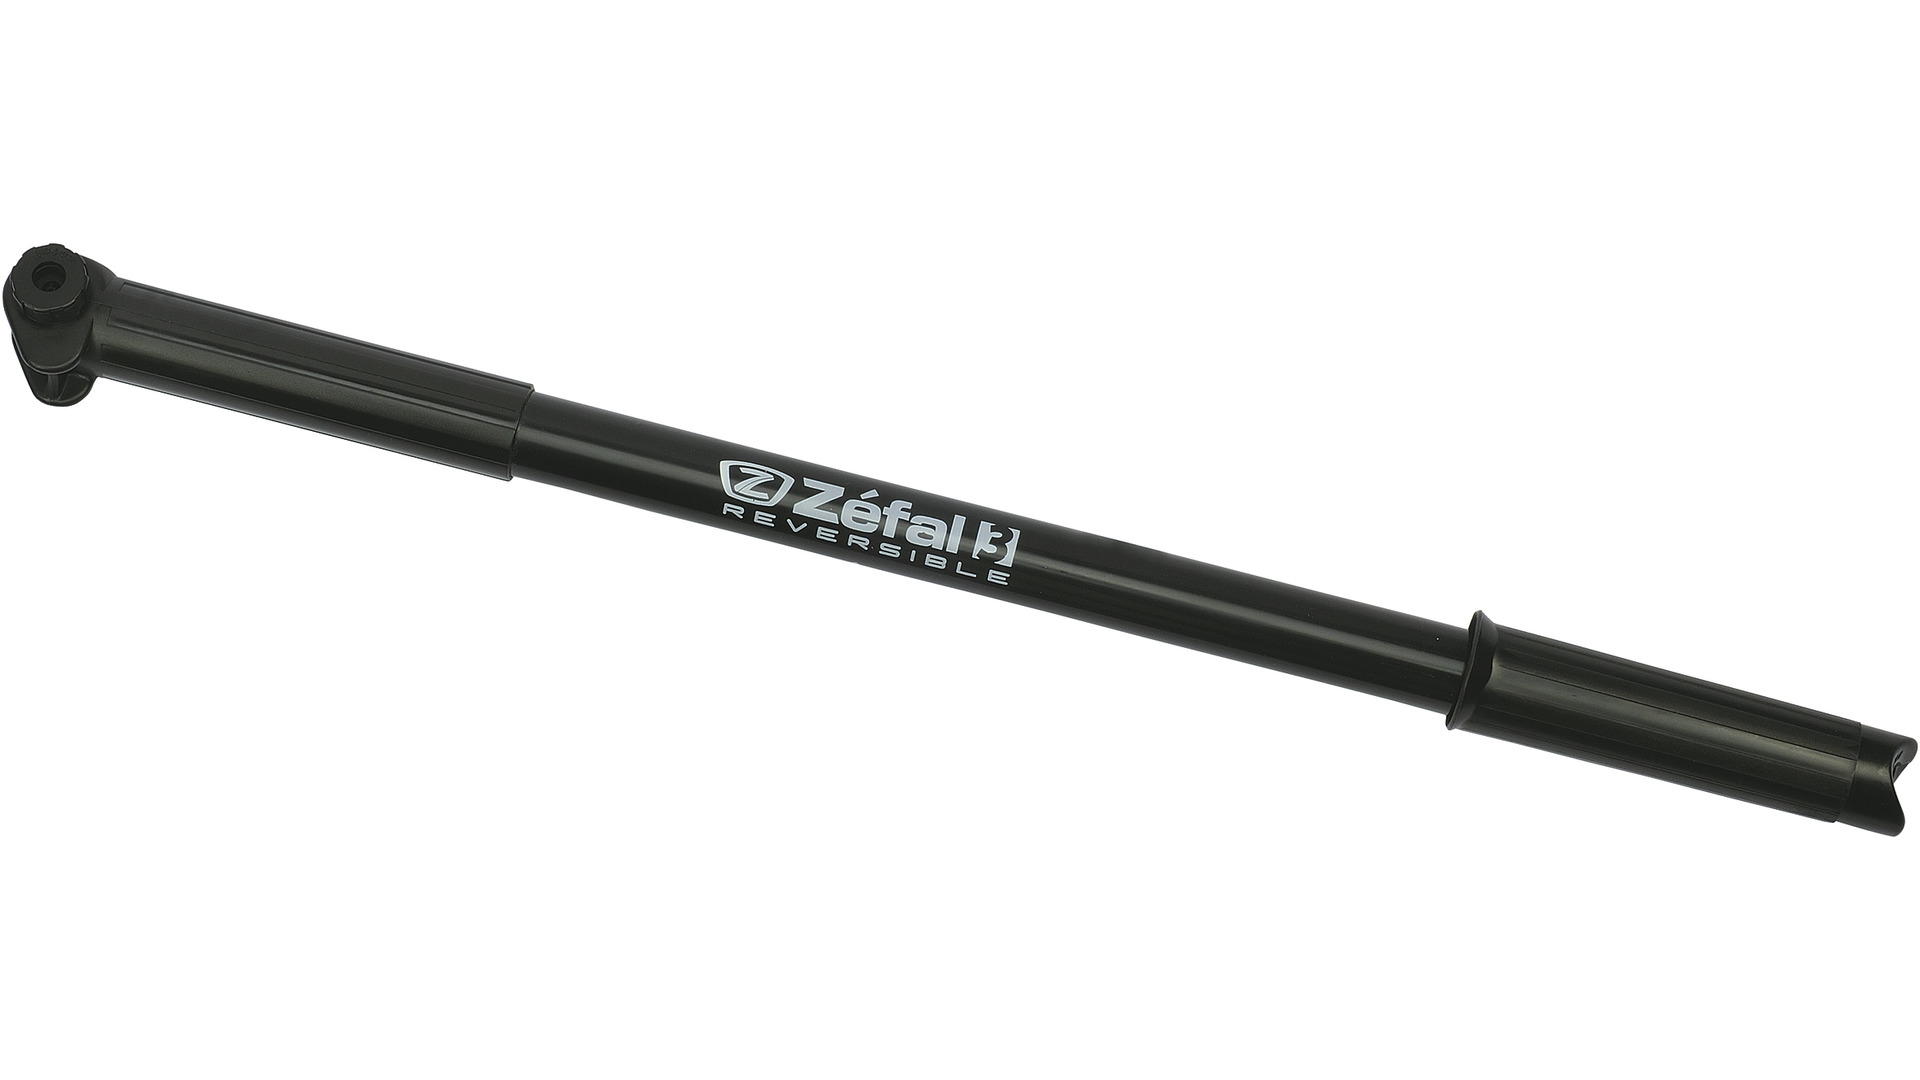 Zéfal Rahmenpumpe Reversible, Rahmenhöhe 53,5-58,5 cm, Spitzenabstand 455-505 mm - Bild 1